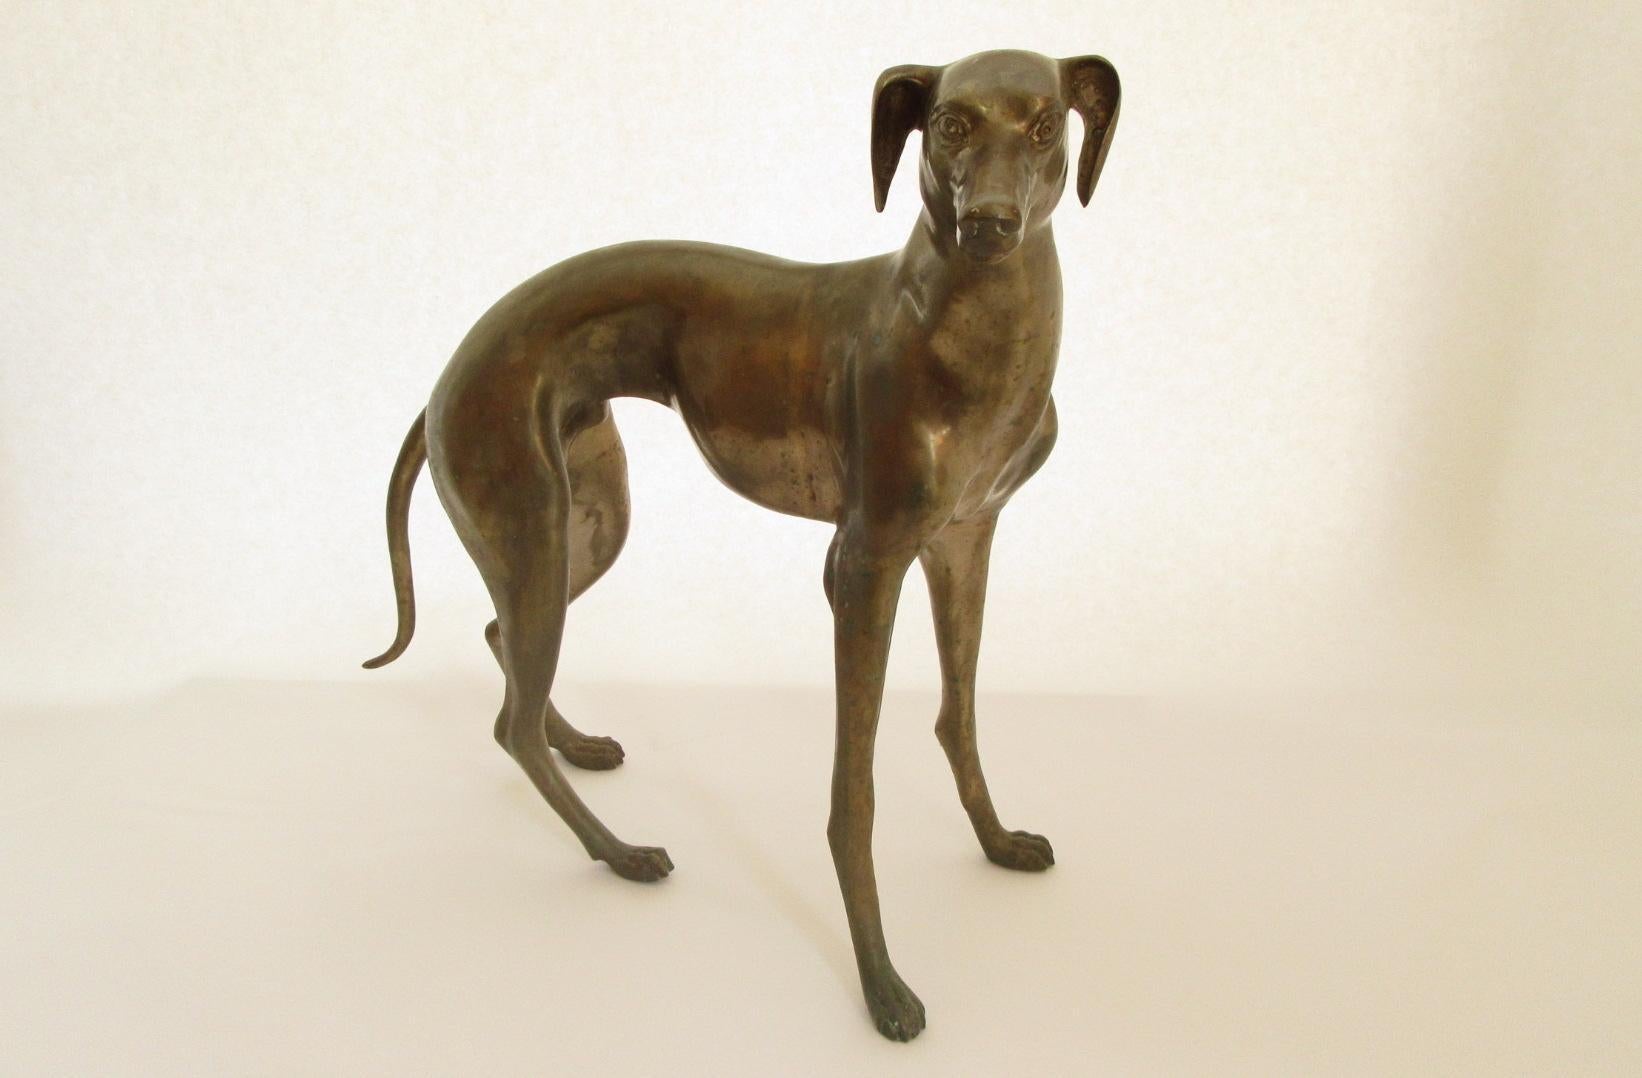 Magnificent Italian bronze greyhound sculptures.
Wonderful patina.
Male and female greyhound.